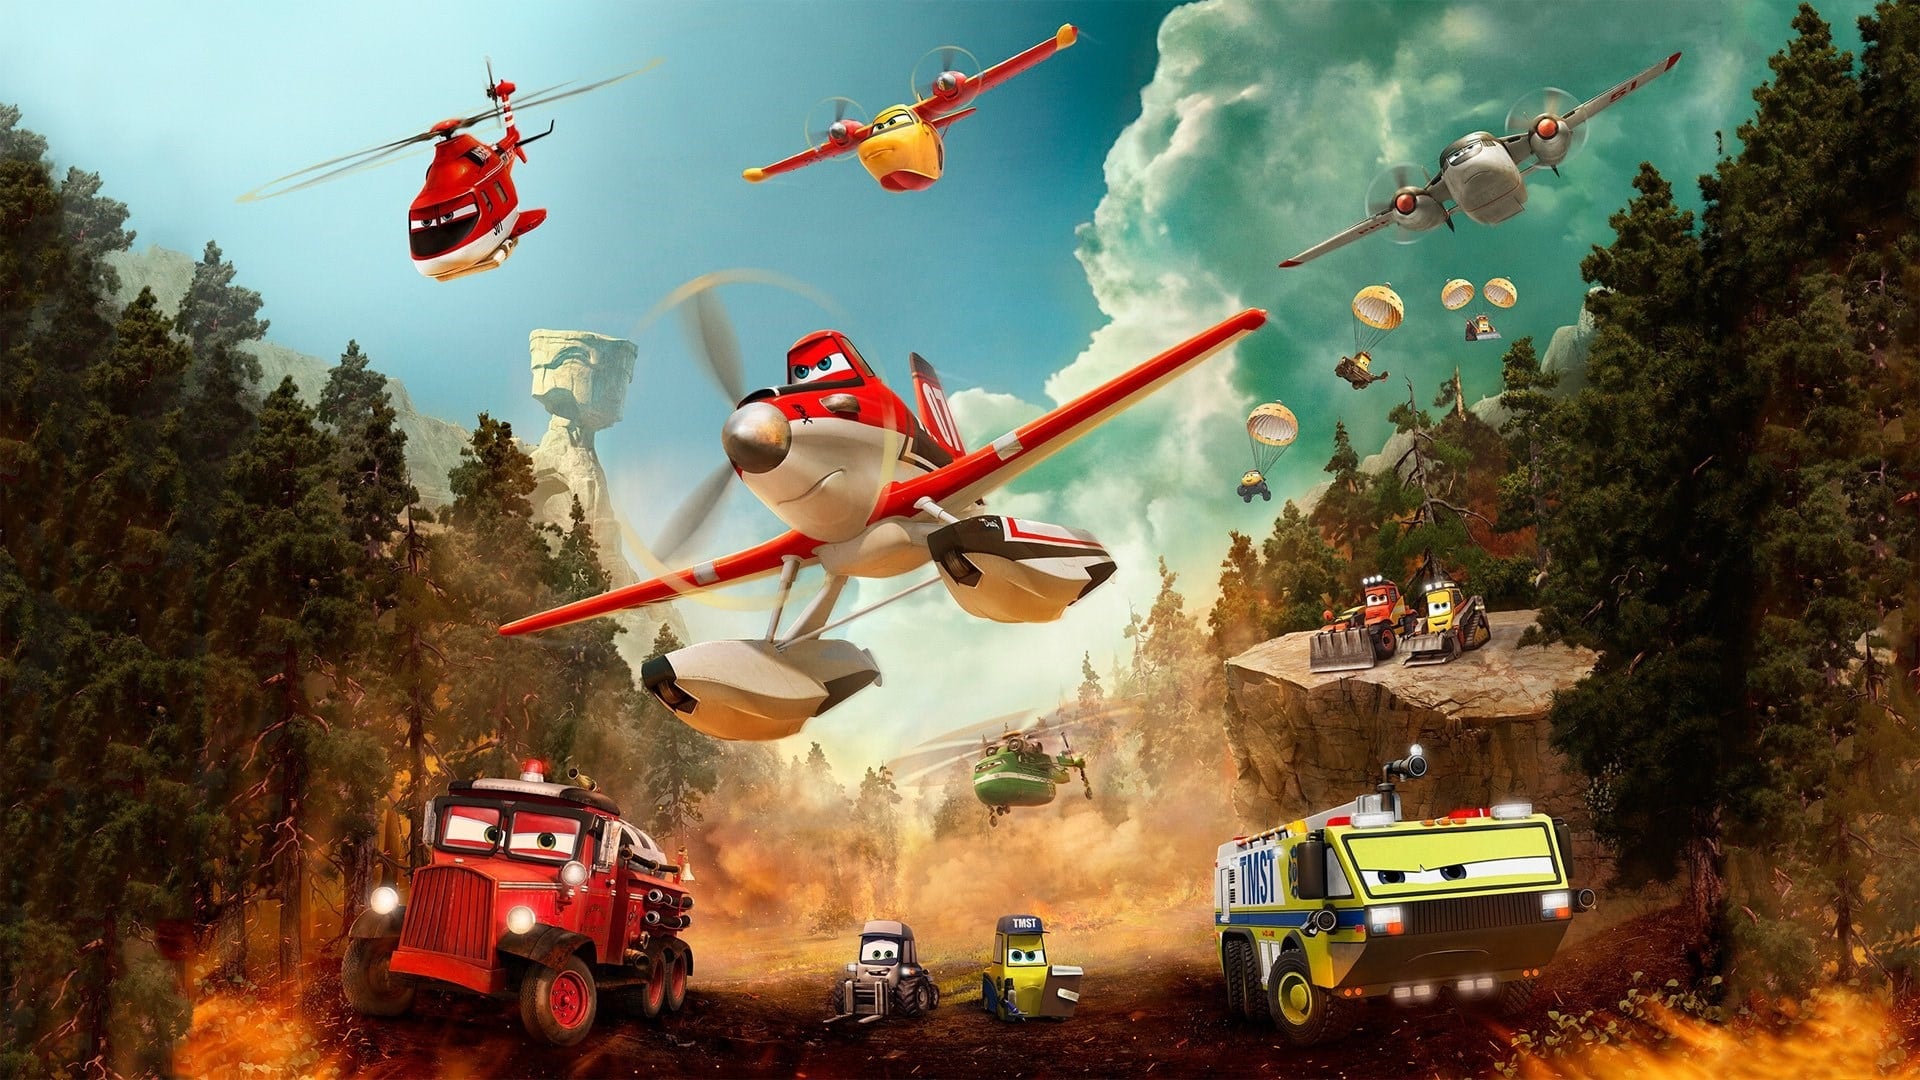 Poster Phim Thế Giới May Bay: Anh Hùng & Biển Lửa (Planes: Fire & Rescue)